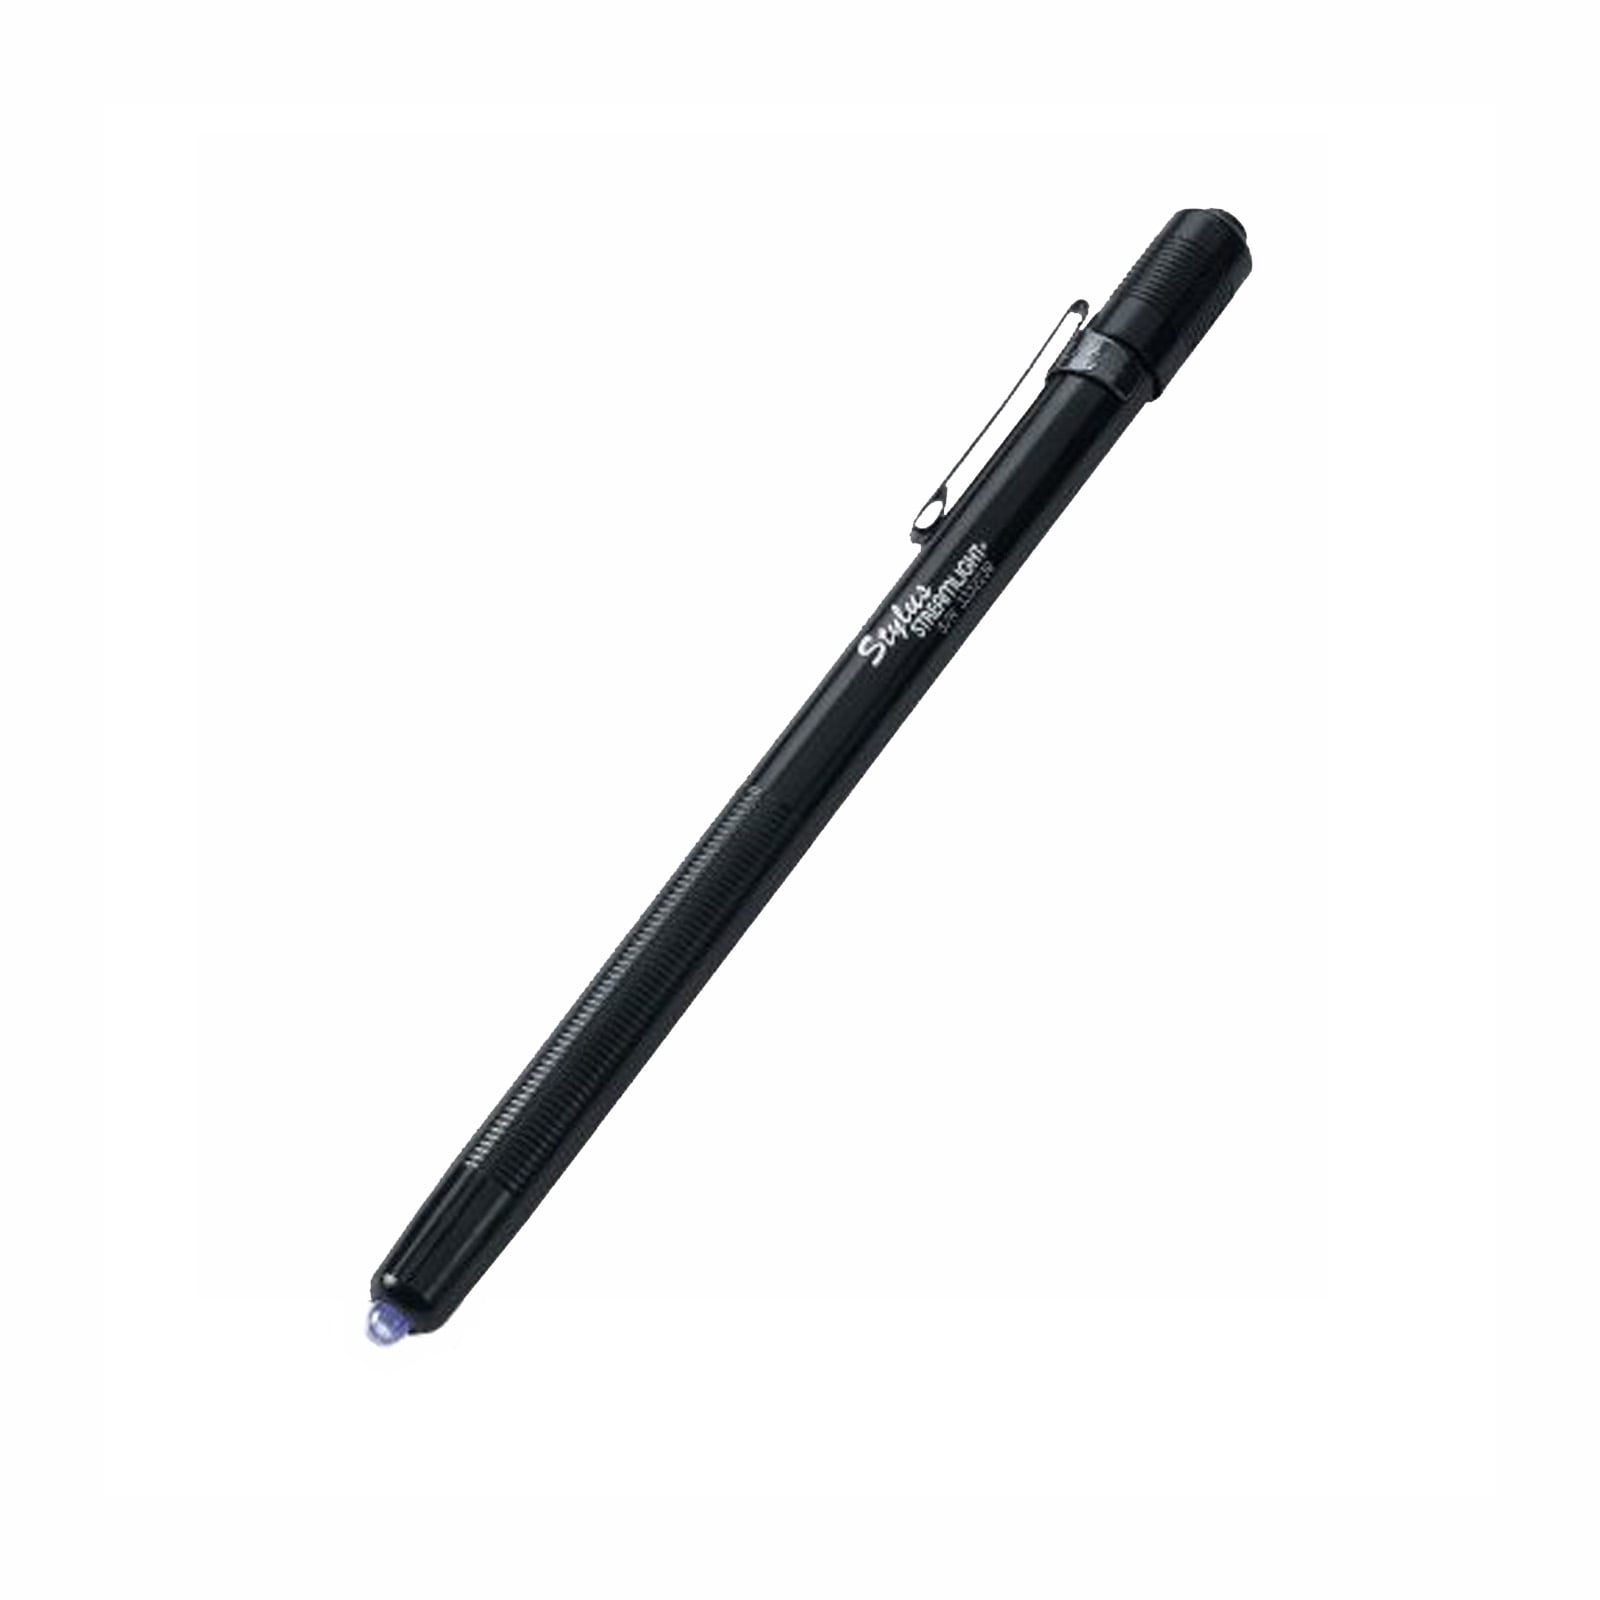 Streamlight Stylus UV Pen Light, Black Walmart.com - 1600x1600 - jpeg